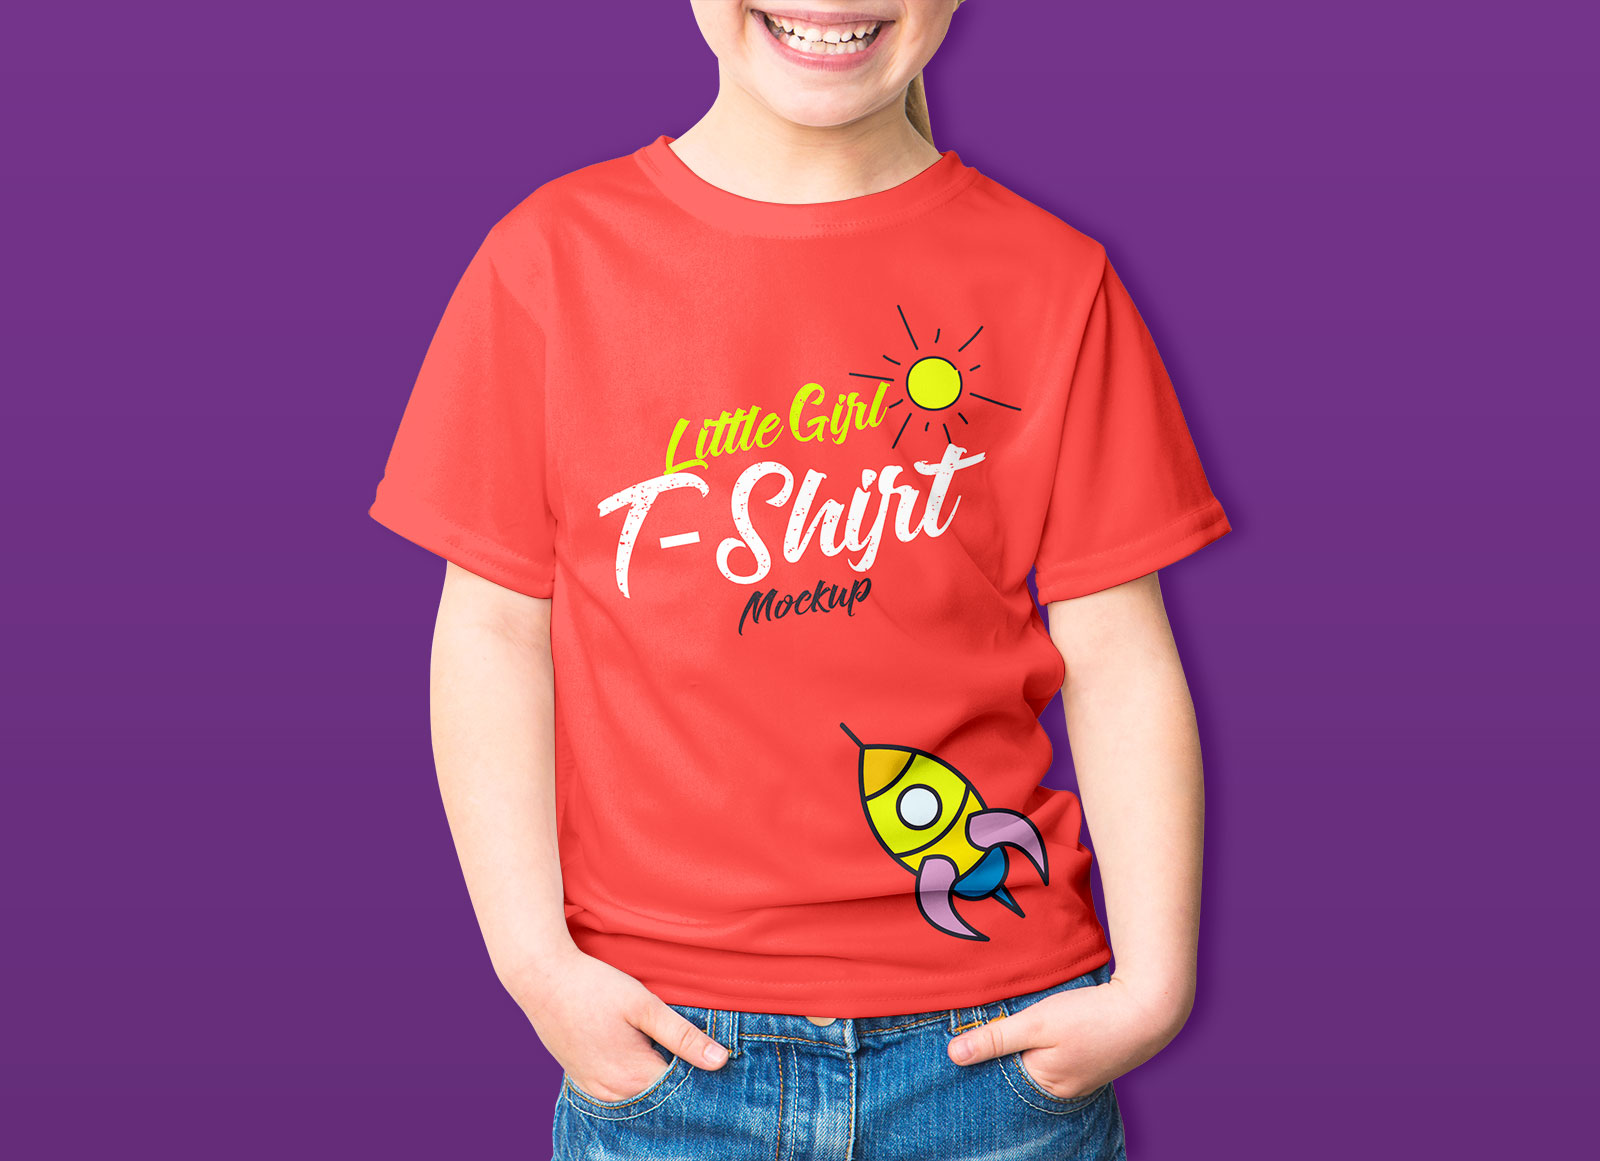 Free-Little-Girl-Kids-T-Shirt-Mockup-PSD